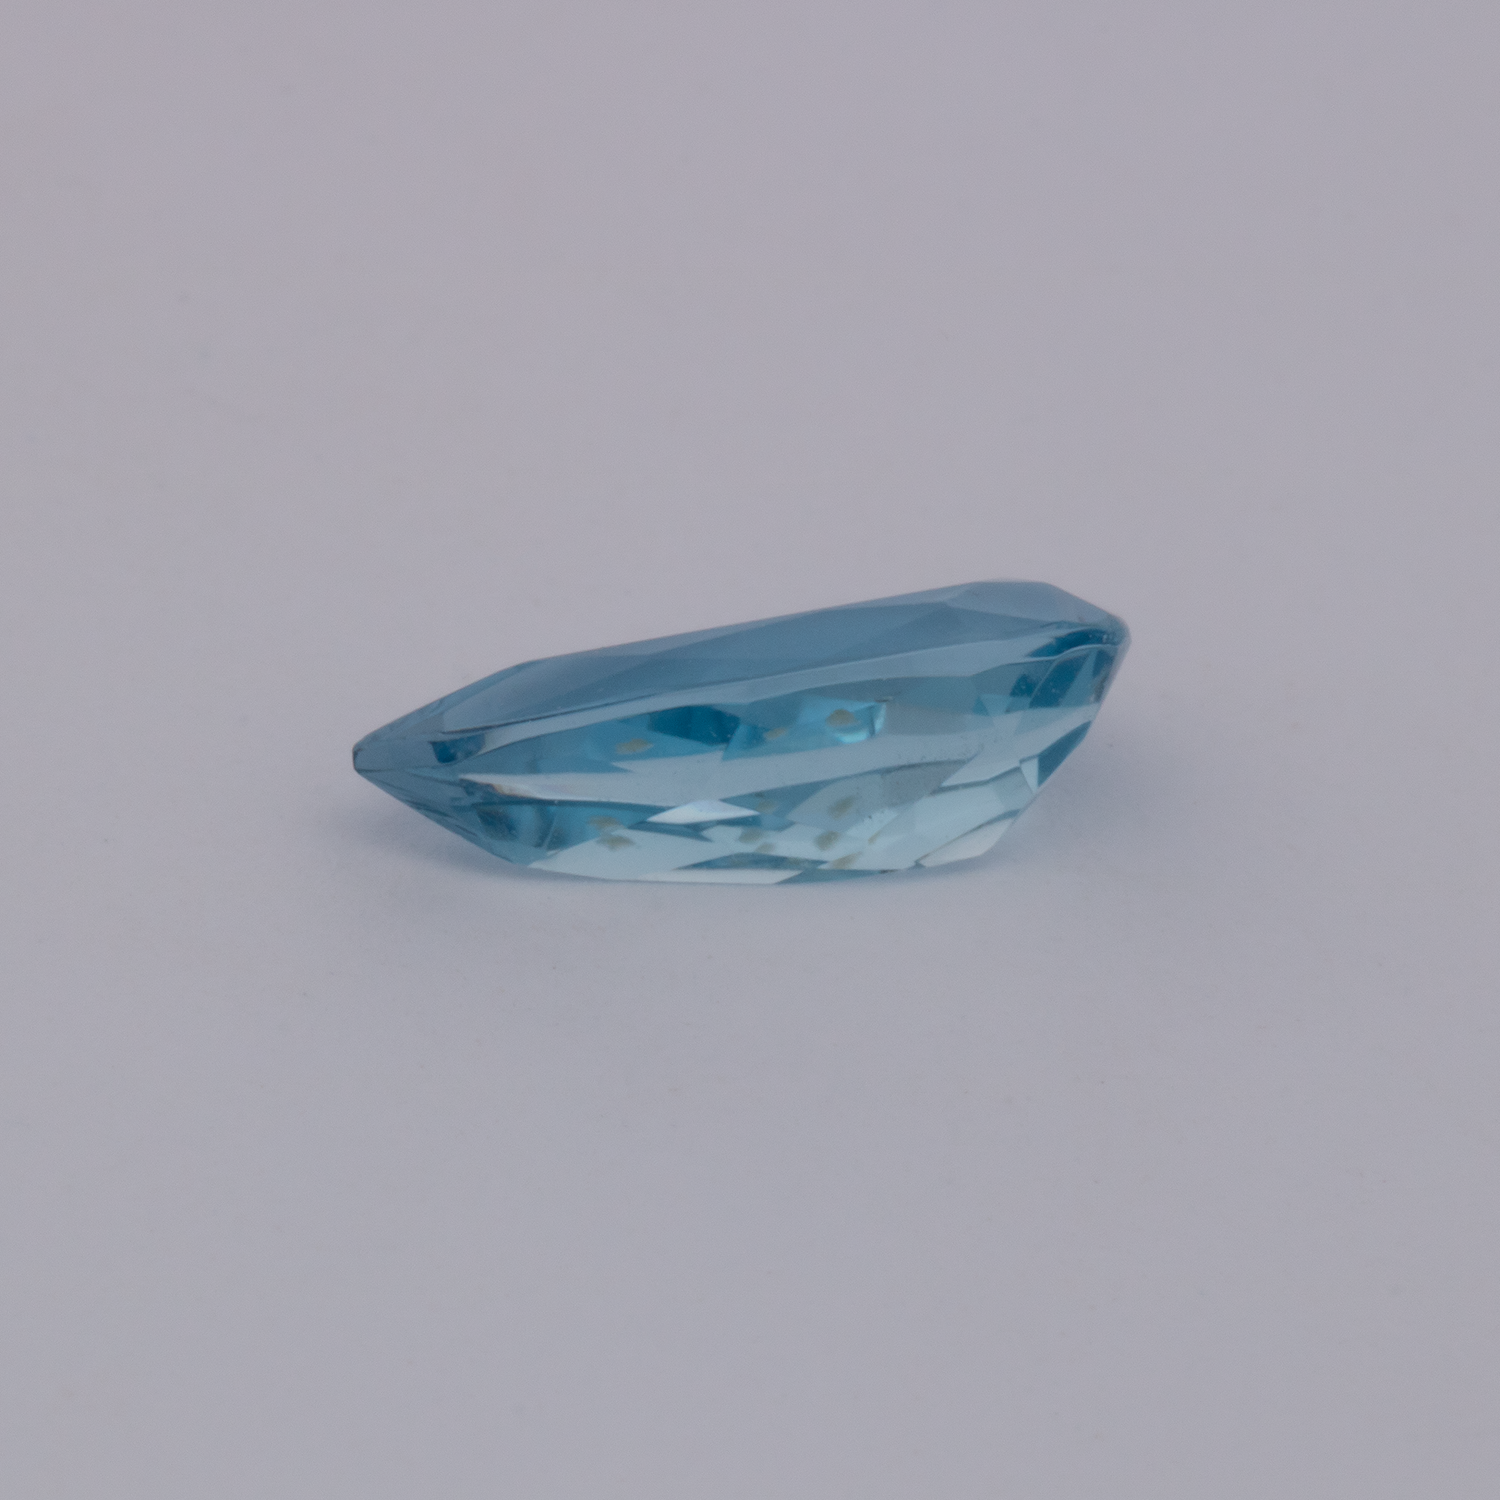 Aquamarin AA - blau, birnform, 9.7x4.6 mm, 0.84 cts, Nr. A99095